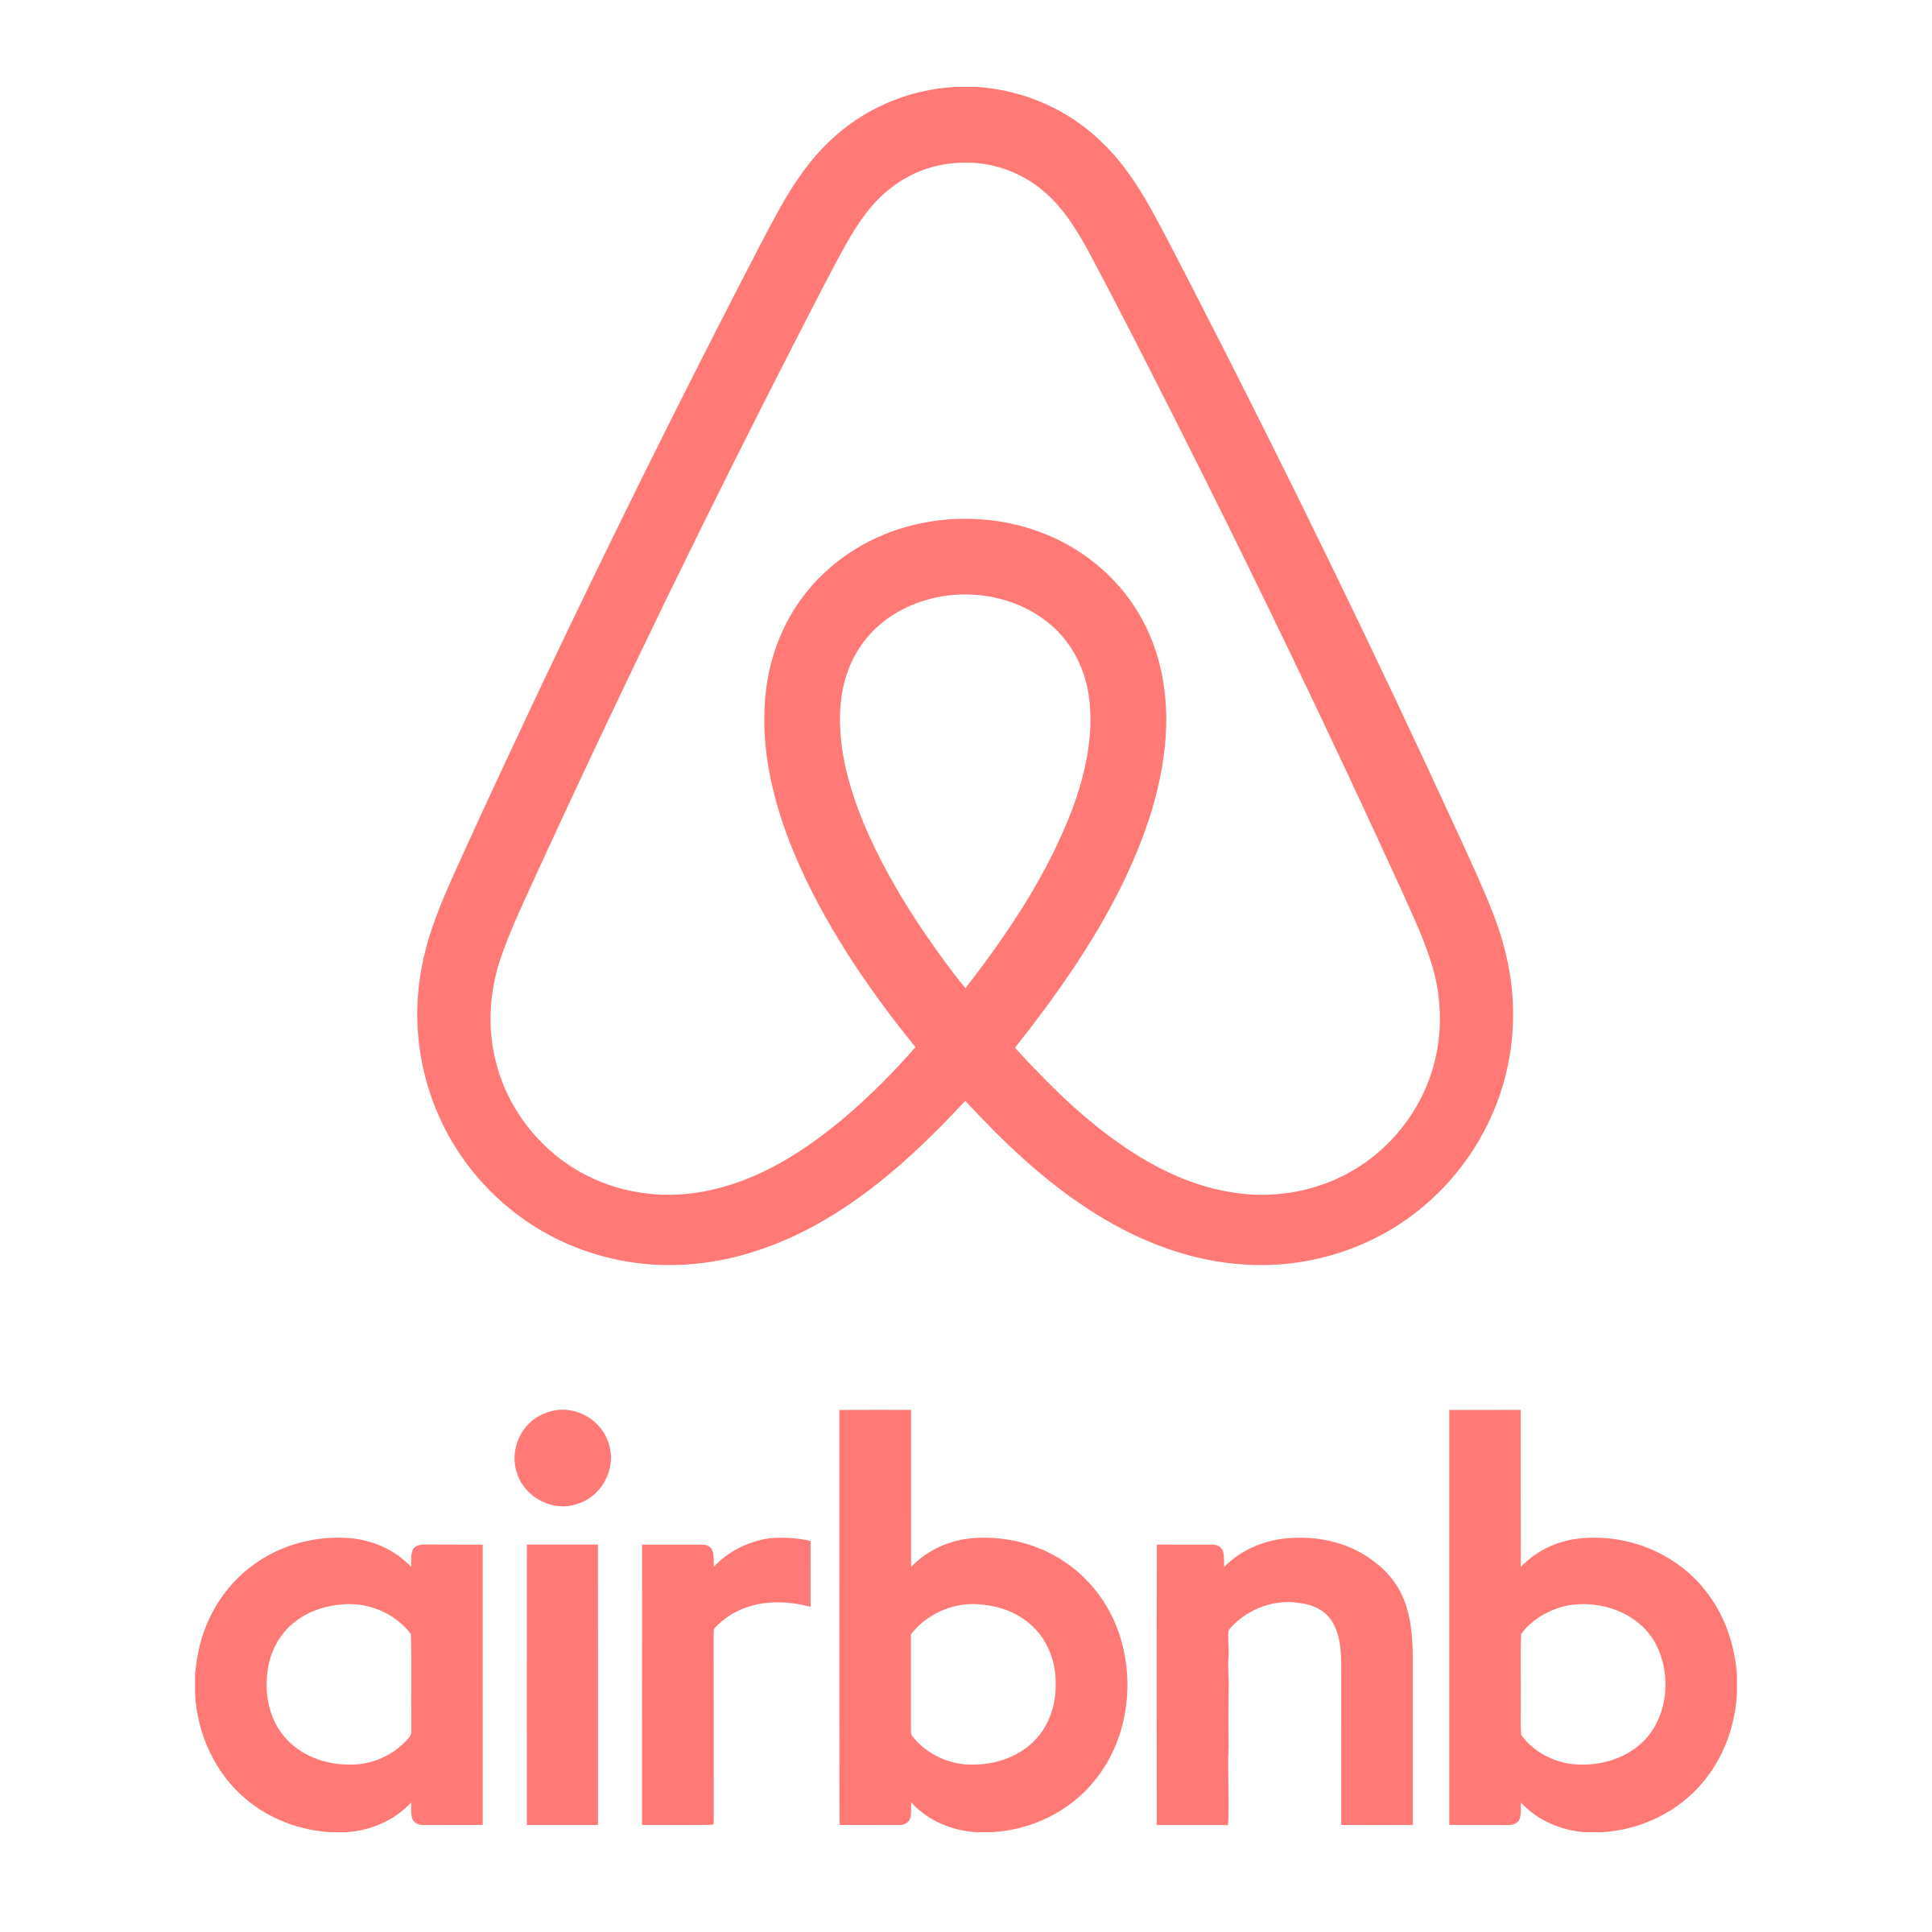 airbnb 2 logo png transparent